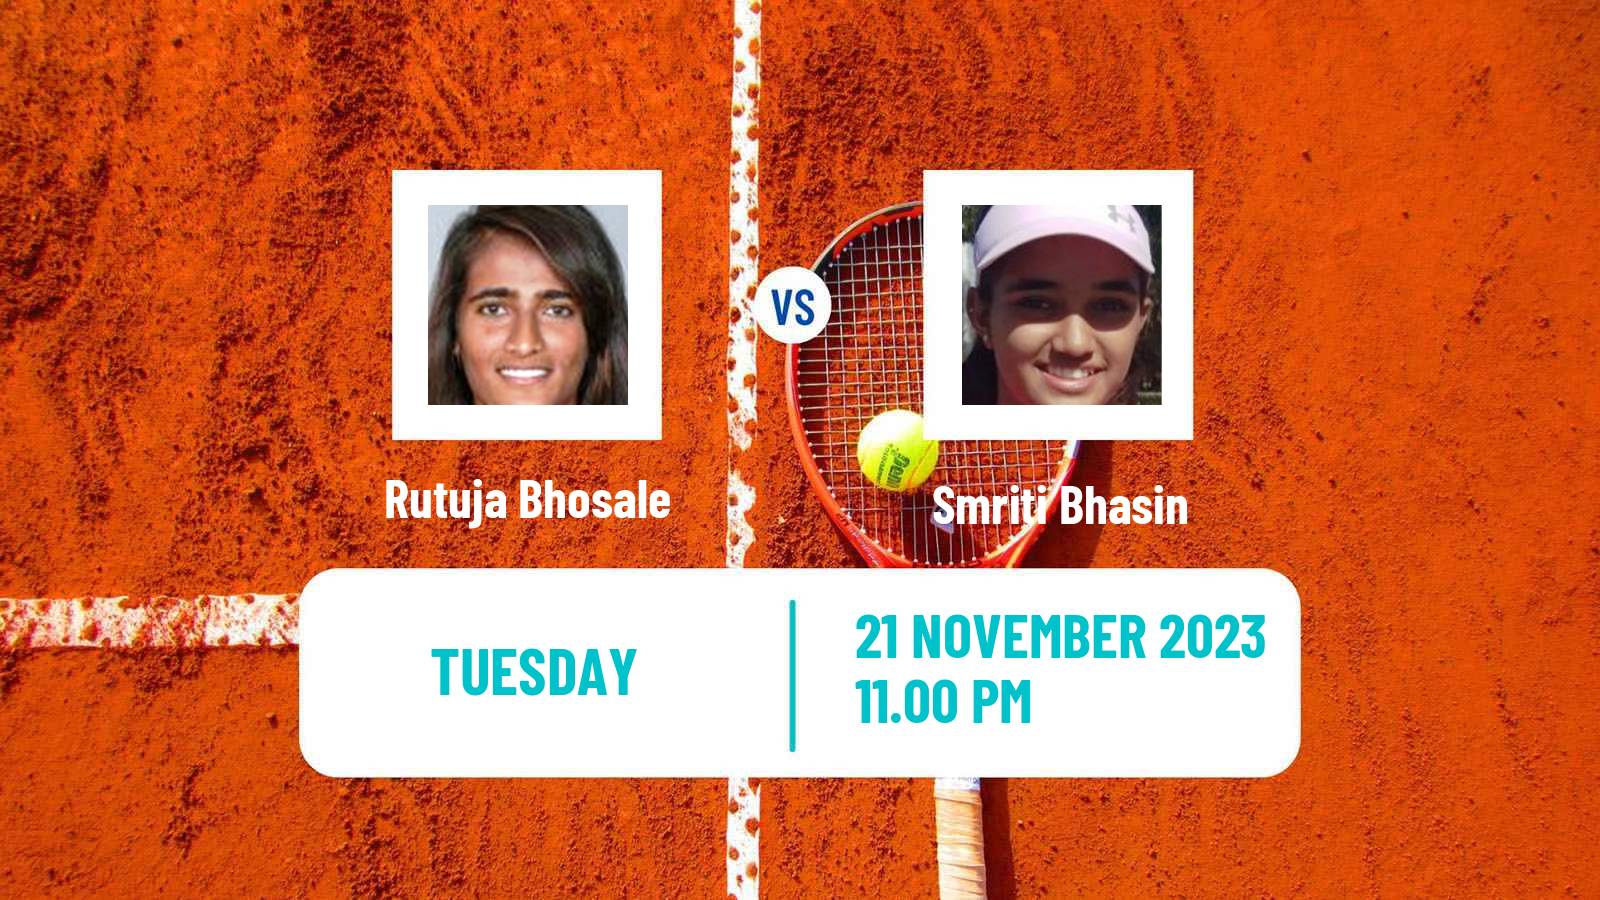 Tennis ITF W25 Bengaluru 2 Women Rutuja Bhosale - Smriti Bhasin